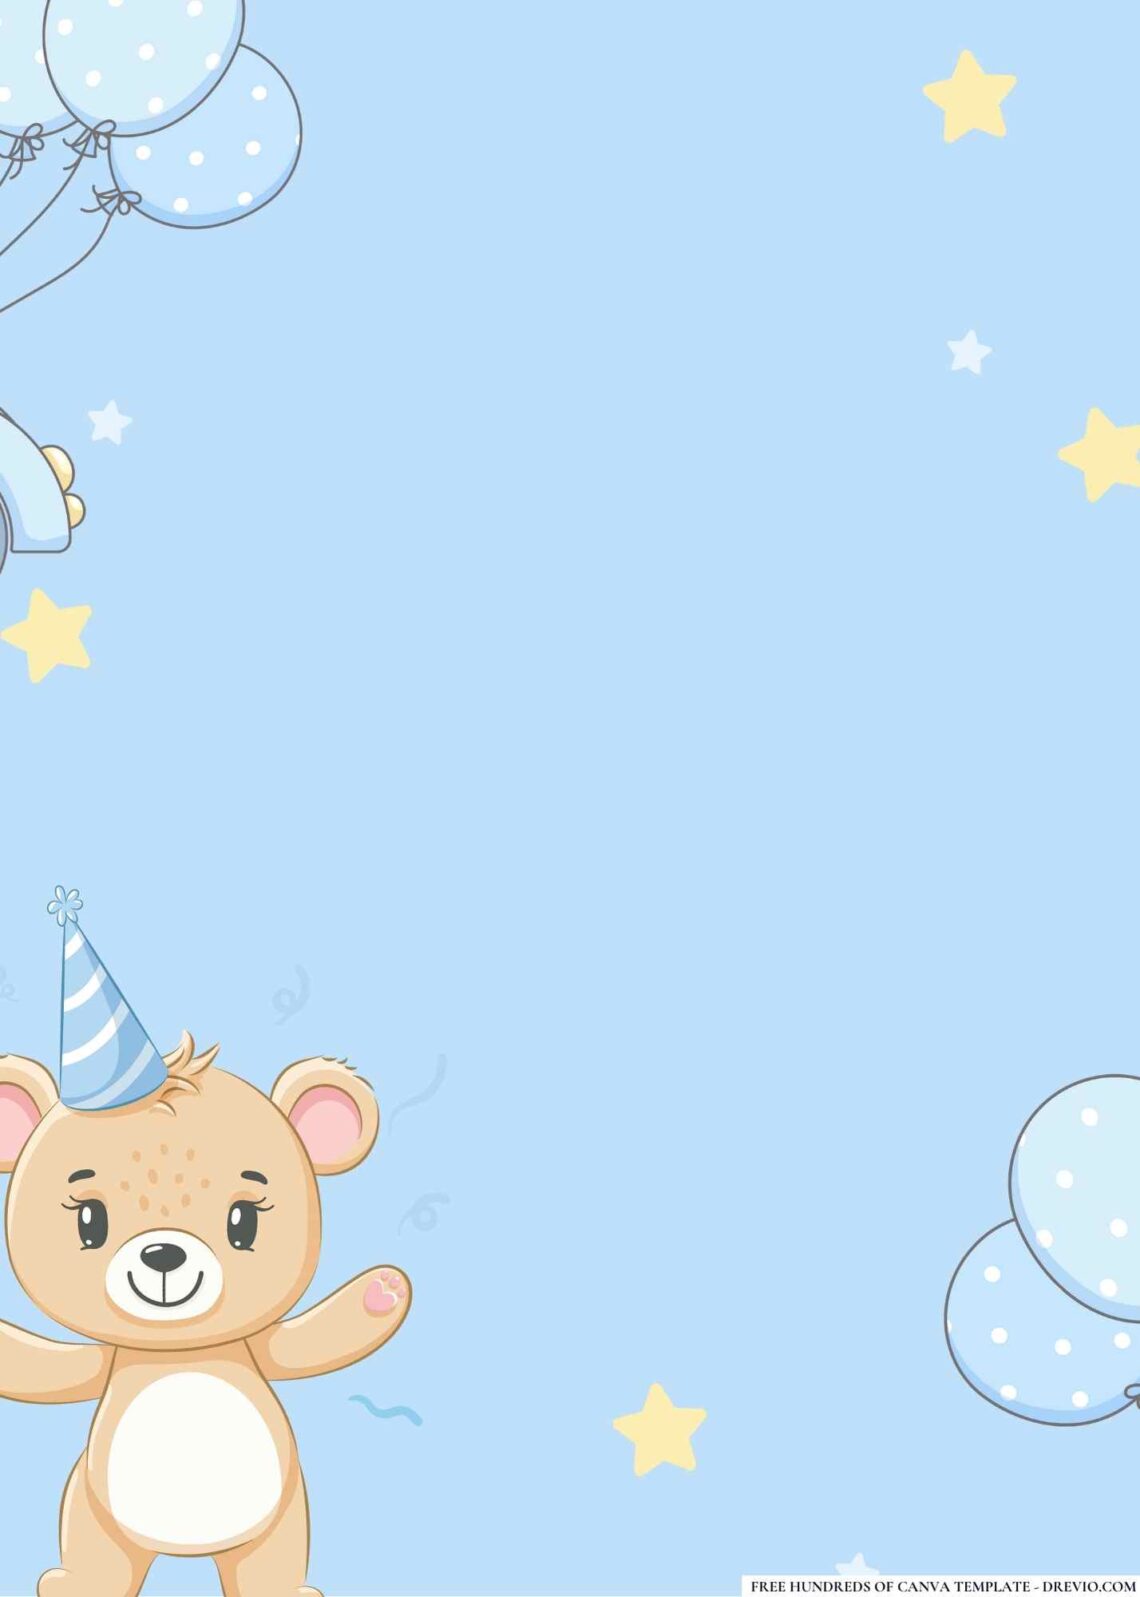 FREE-Teddy Bear-Birthday-Canva-Templates (16) | Download Hundreds FREE ...